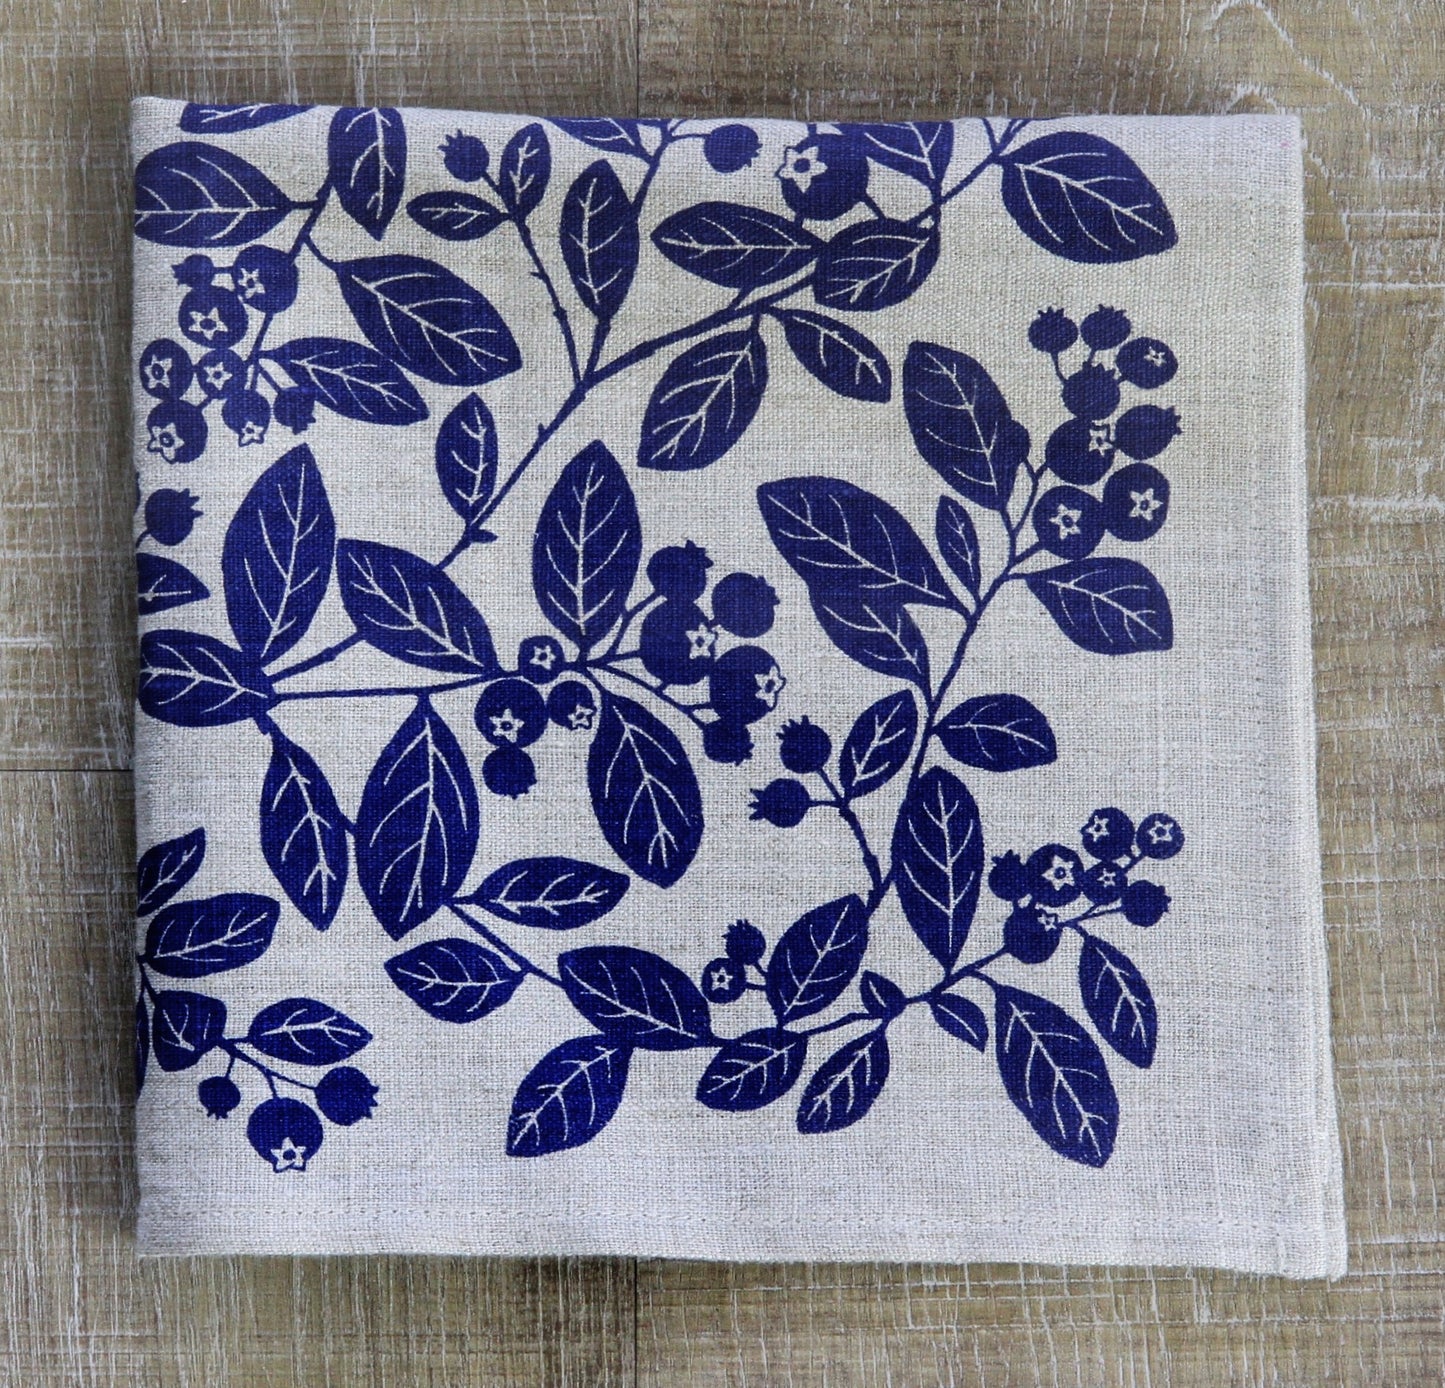 Blueberry Napkin in Indigo on Natural Flax Linen